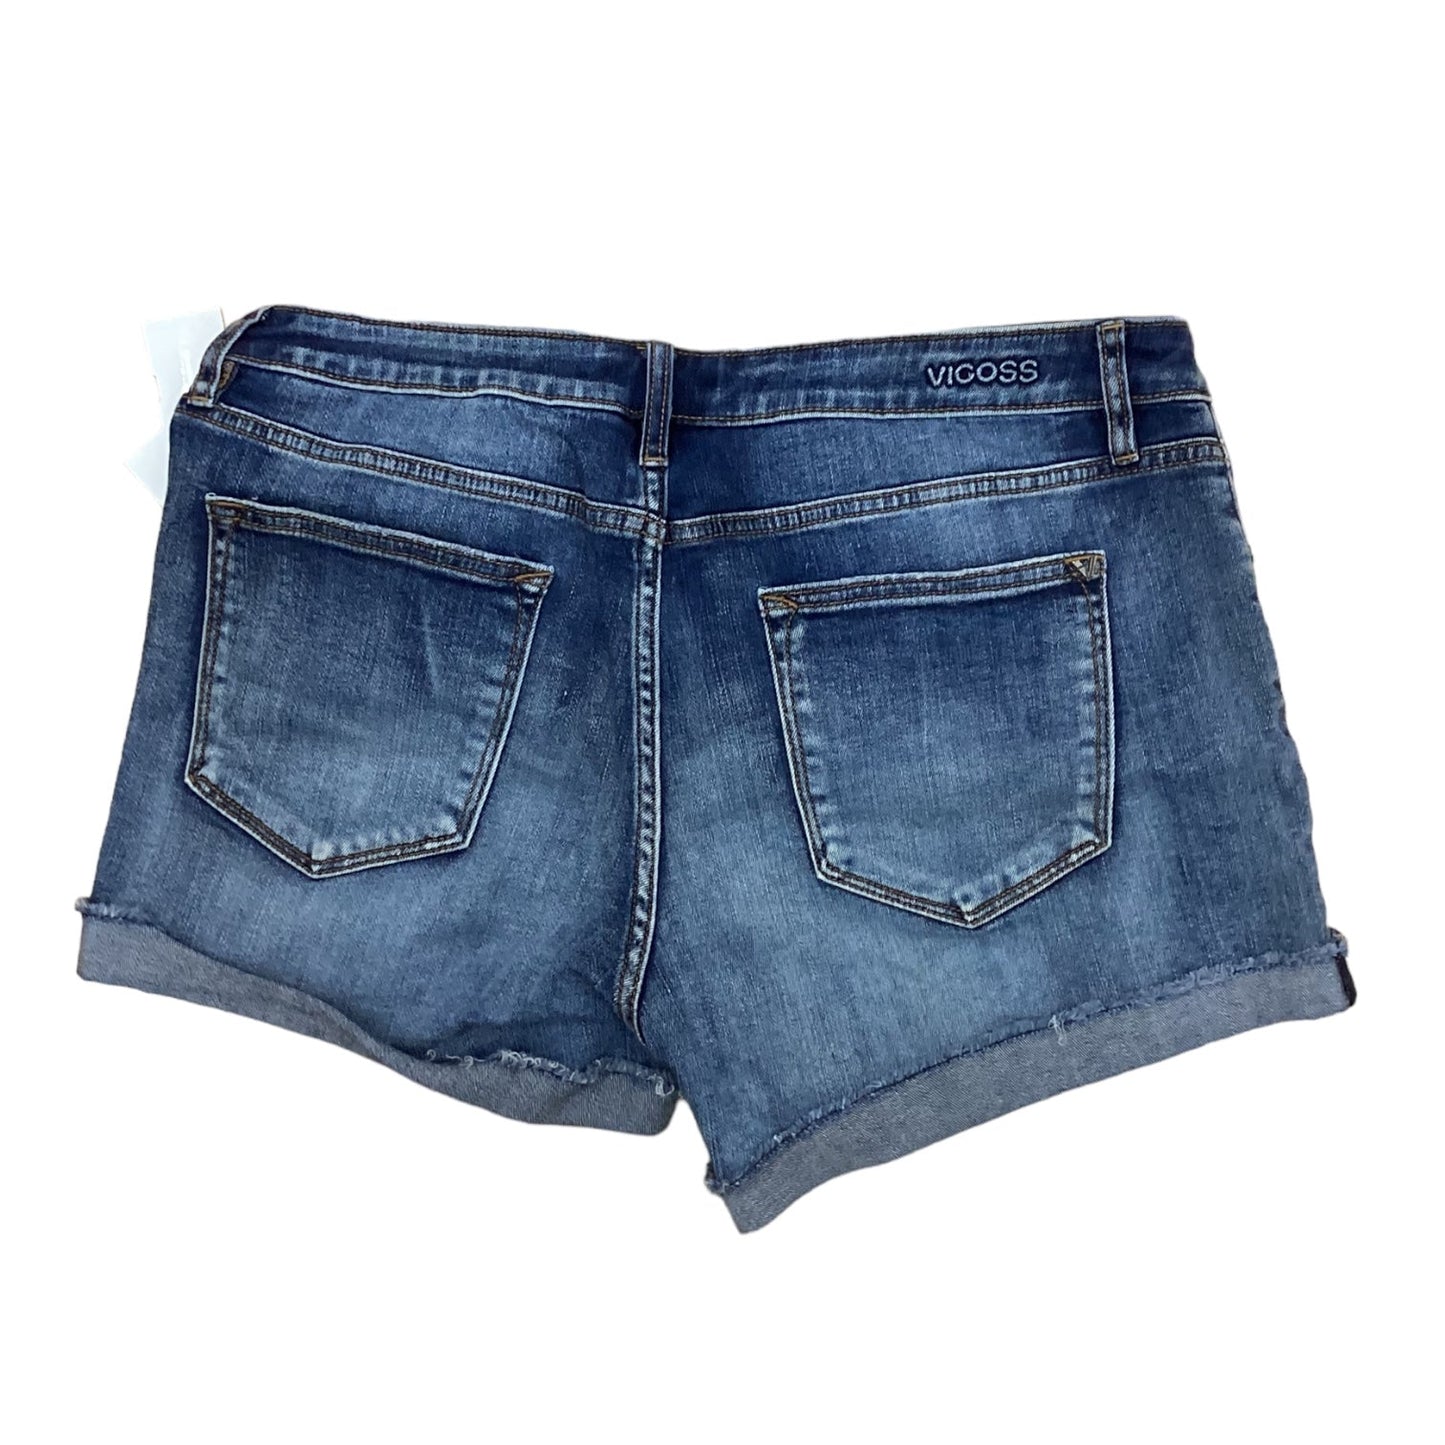 Blue Denim Shorts Vigoss, Size 12